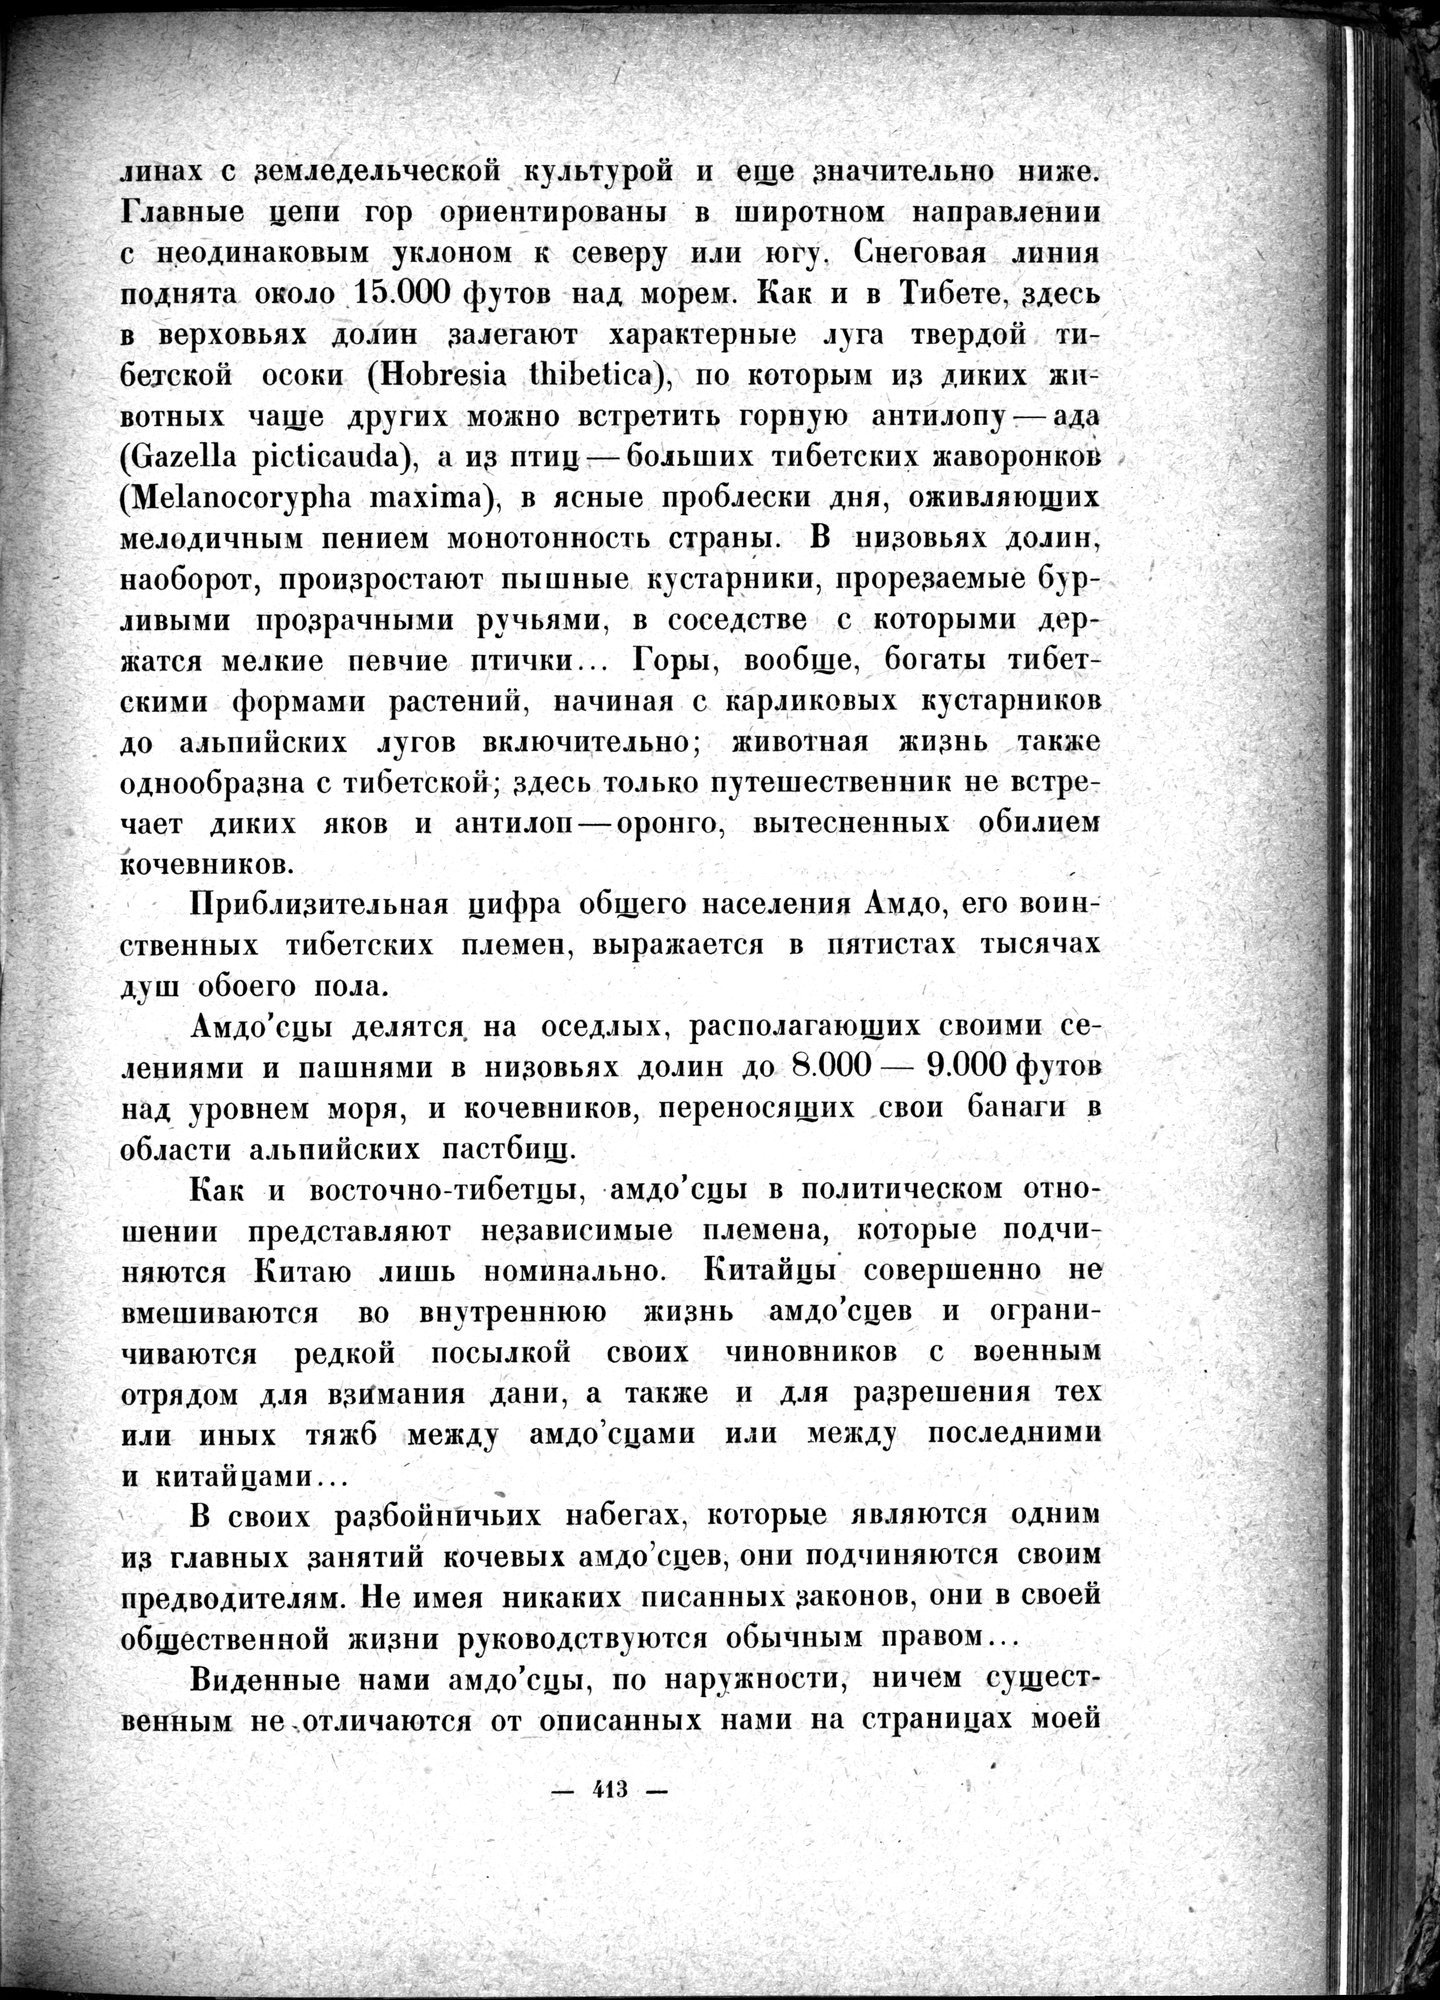 Mongoliya i Amdo i mertby gorod Khara-Khoto : vol.1 / Page 475 (Grayscale High Resolution Image)